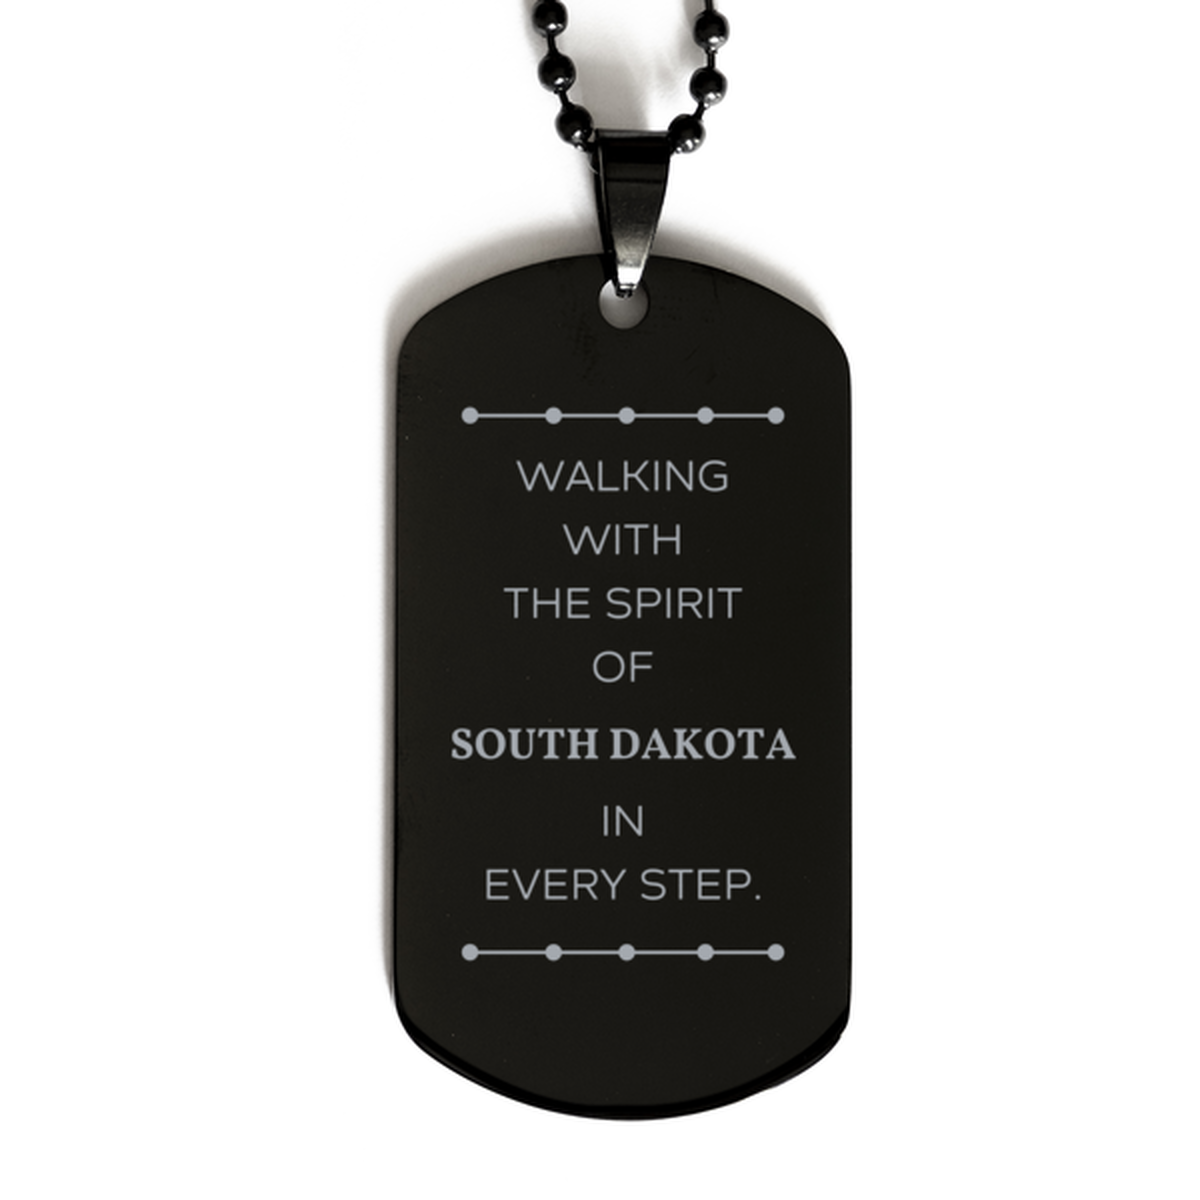 South Dakota Gifts, Walking with the spirit, Love South Dakota Birthday Christmas Black Dog Tag For South Dakota People, Men, Women, Friends